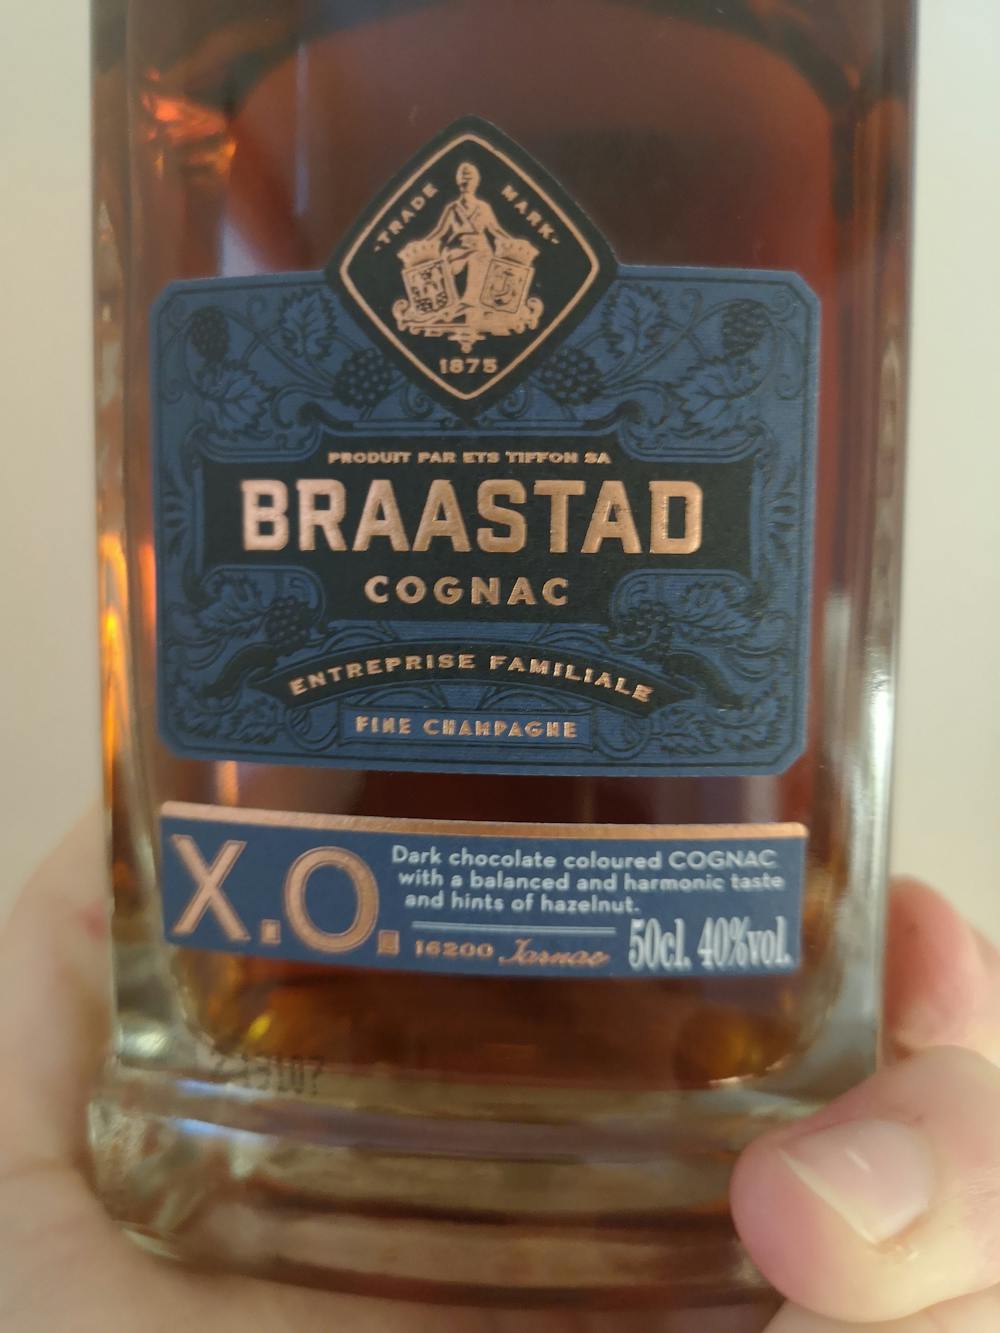 Ingrediensliste - Braastad cognac, Trade mark